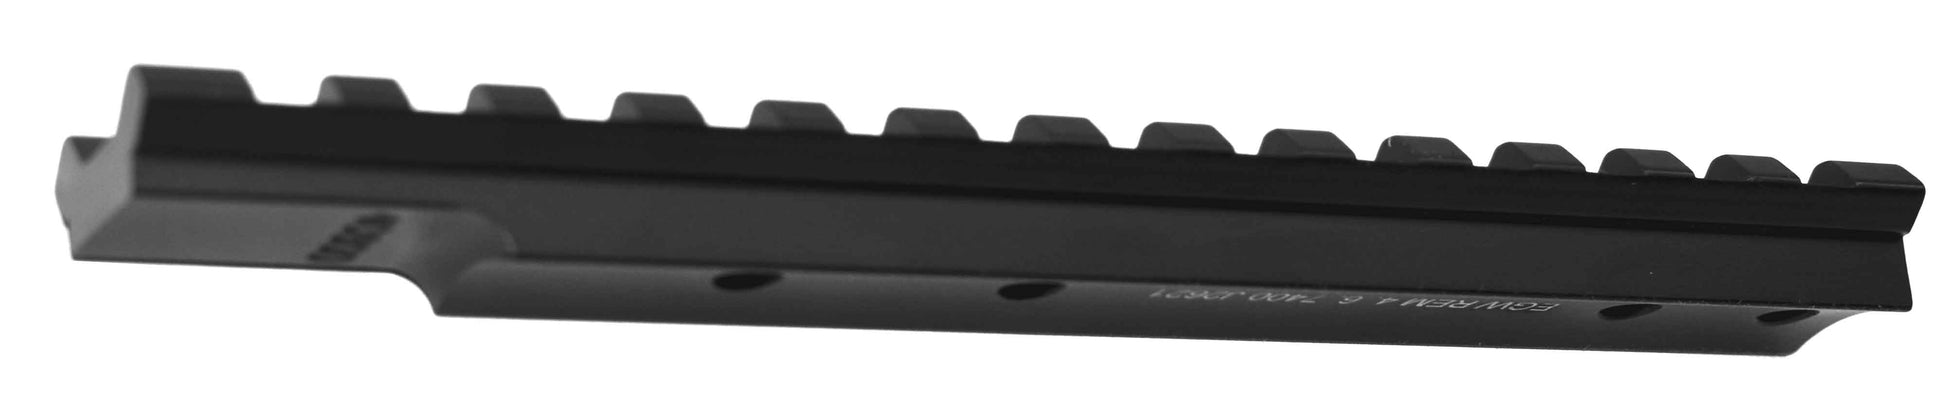 stoeger m3000 shotgun picatinny mount adapter.